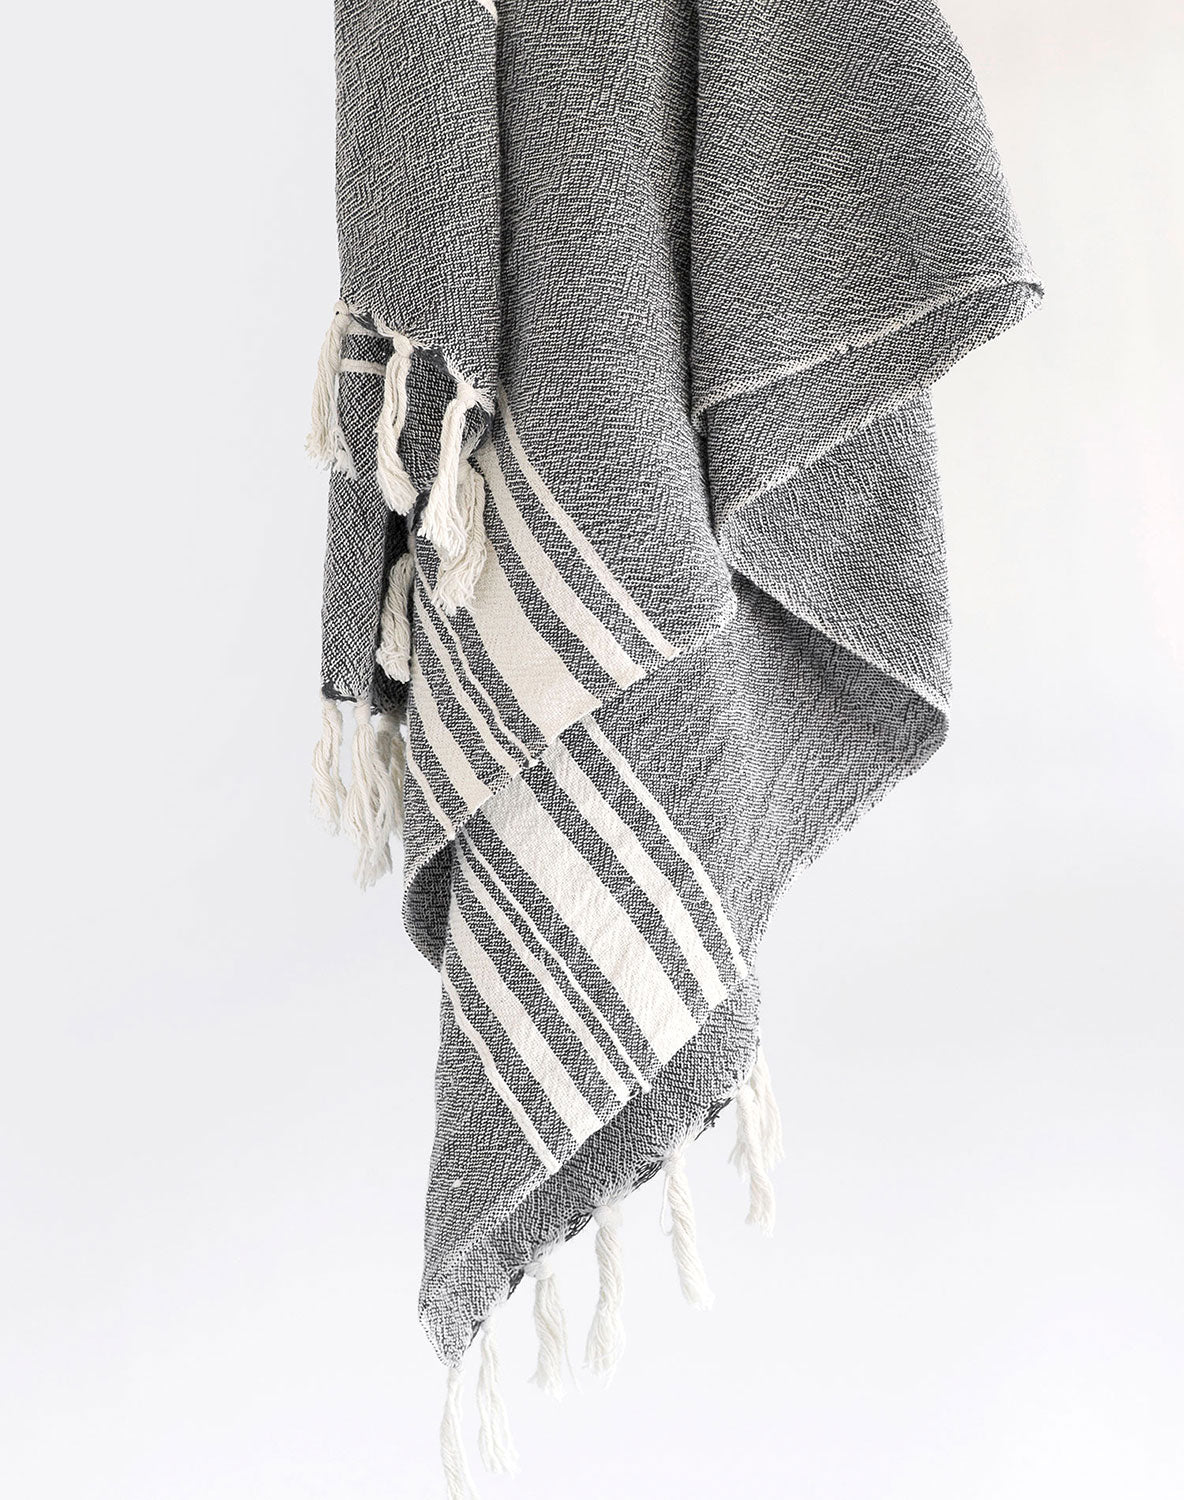 Towels_BathTowel_BeachTowel_Contemporary_Handwoven_Striped_Charcoal